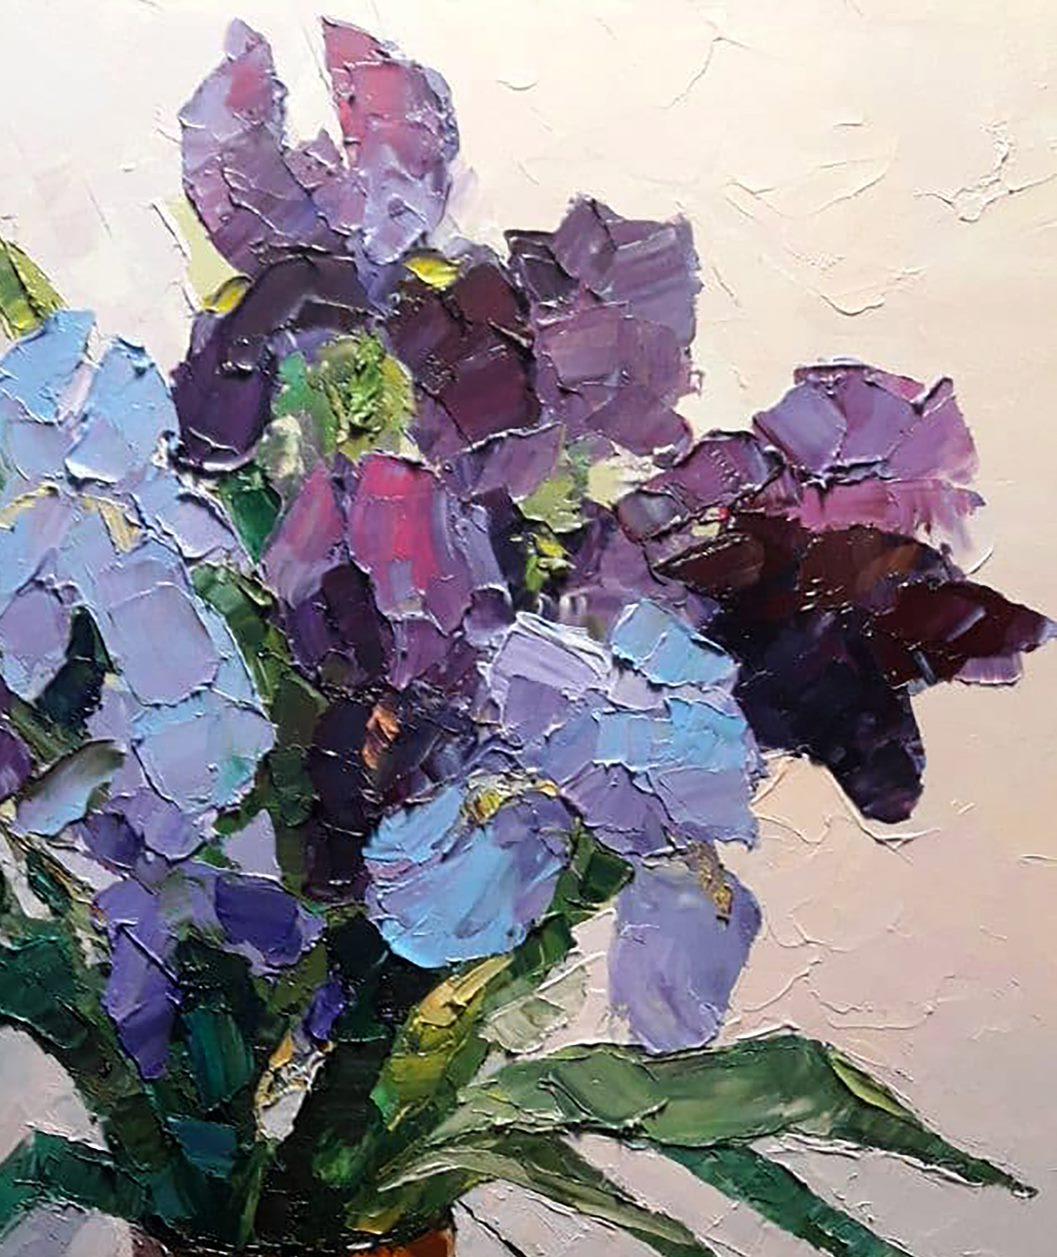 Artist: Boris Serdyuk 
Work: Original oil painting, handmade artwork, one of a kind 
Medium: Oil on Canvas
Style: Impressionism
Year: 2023
Title: Irises
Size: 31.5